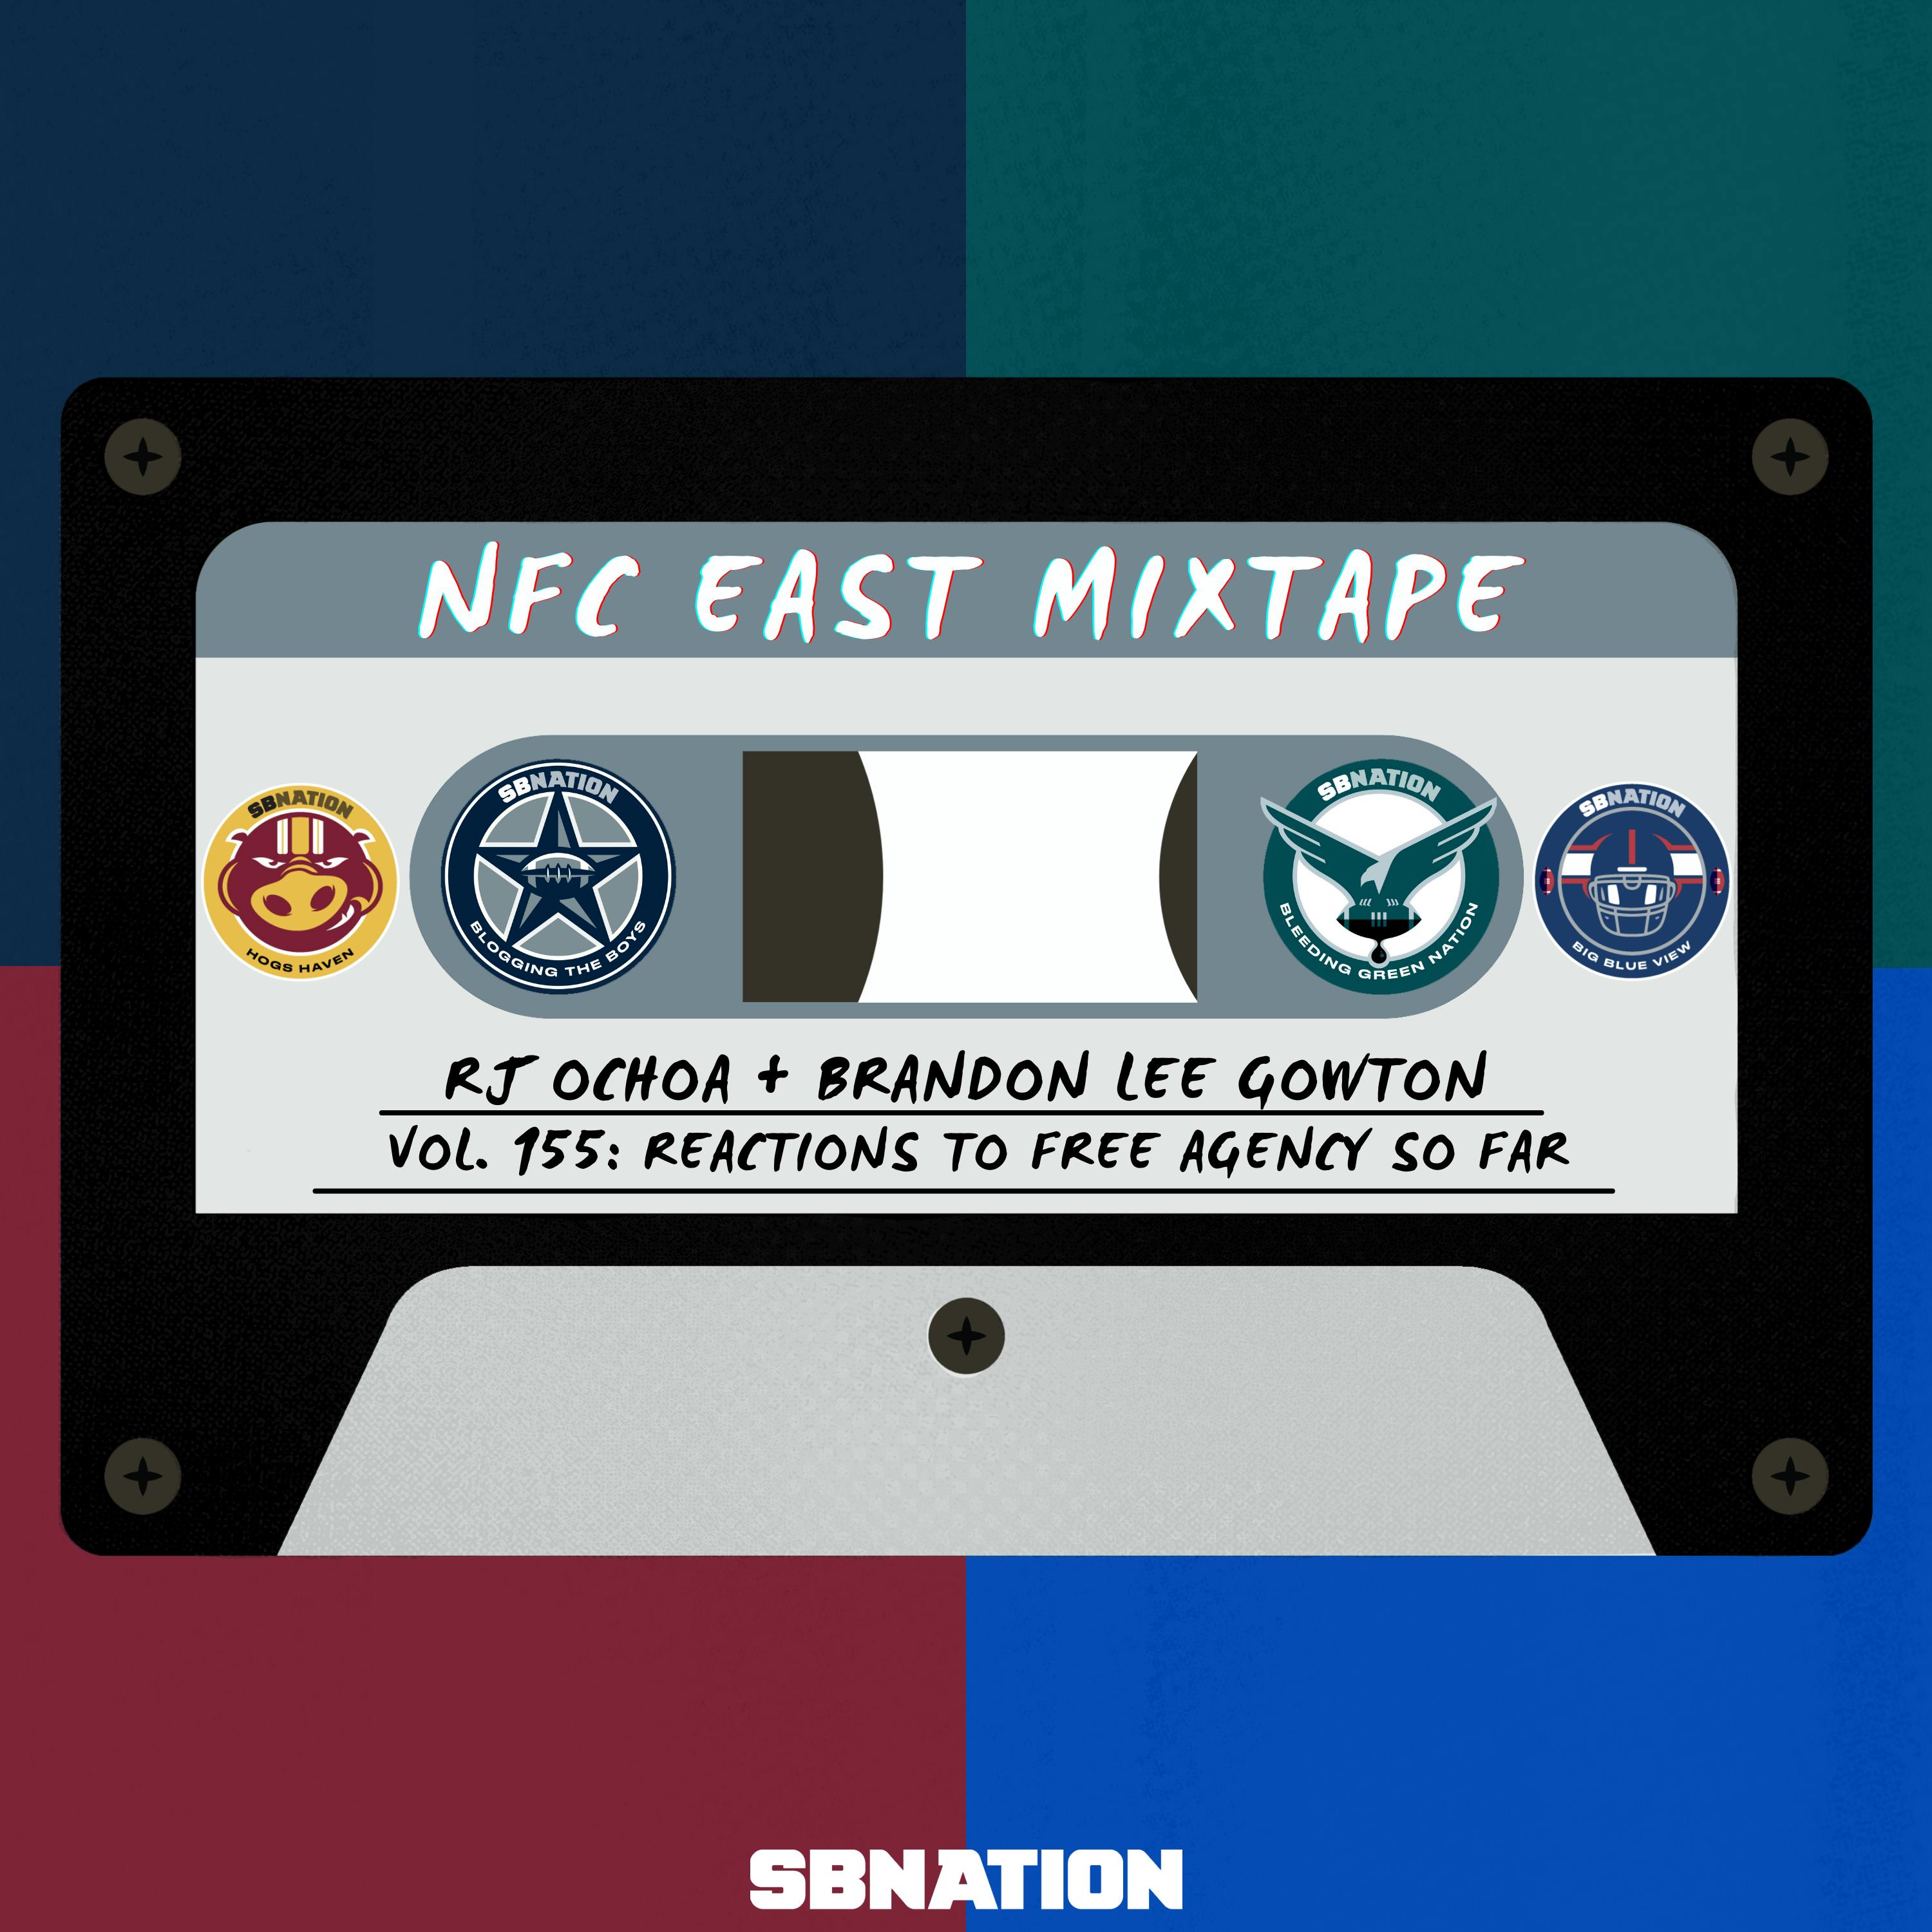 NFC East Mixtape Vol. 155: Reactions to free agency so far